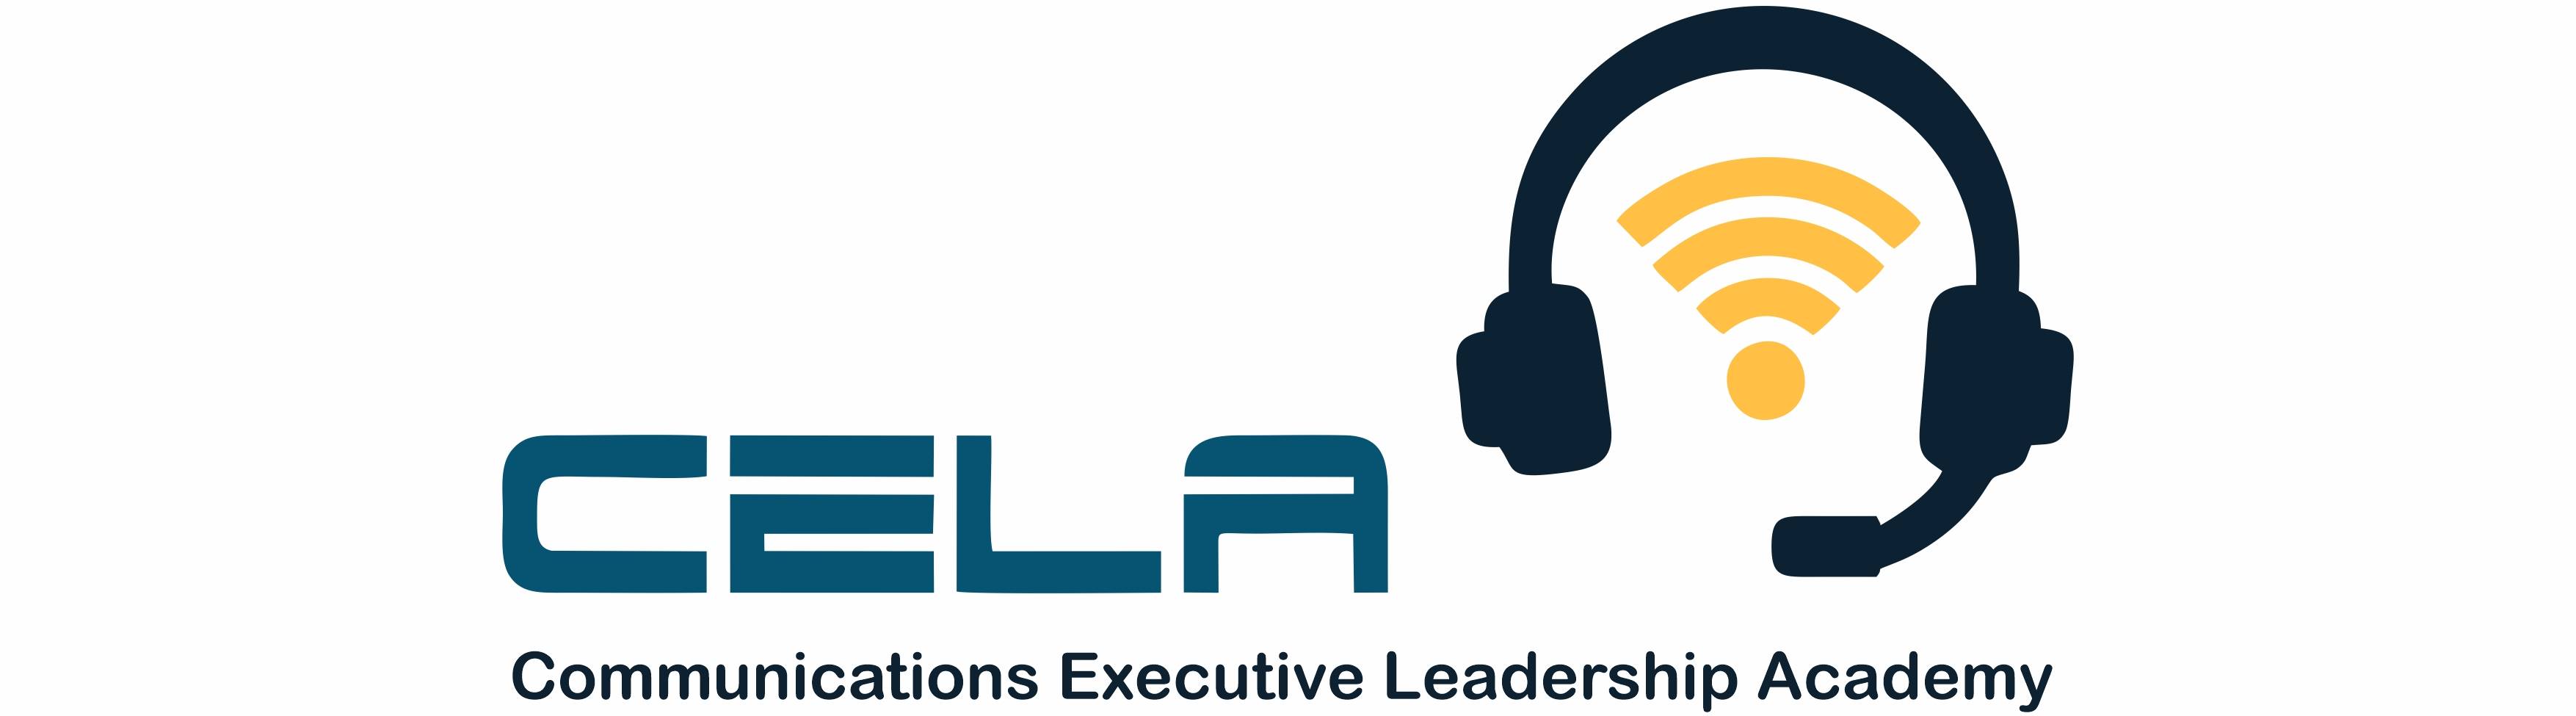 Communications Executive Leadership Academy - Spring 2020